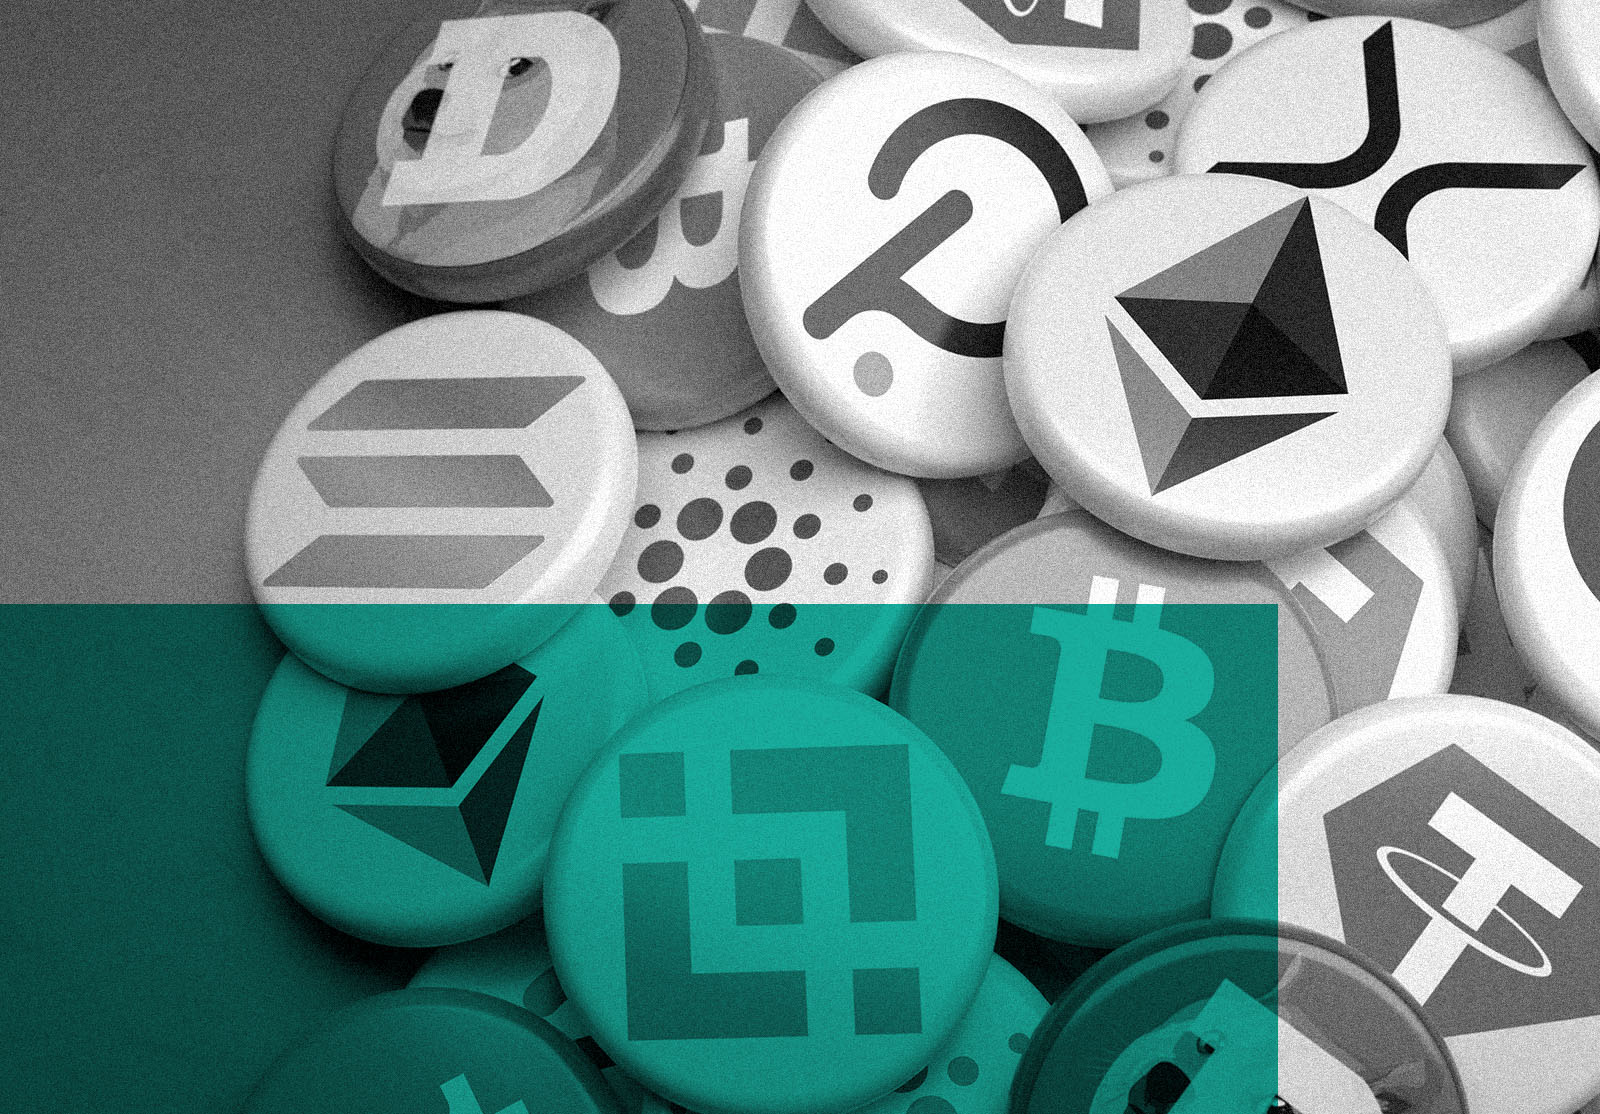 Logos of the main cryptocurrencies Bitcoin, Ethereum, Binance, Cardano, Ripple, Dogecoin, Tether, Solana, Polkadot on a heap on a table.